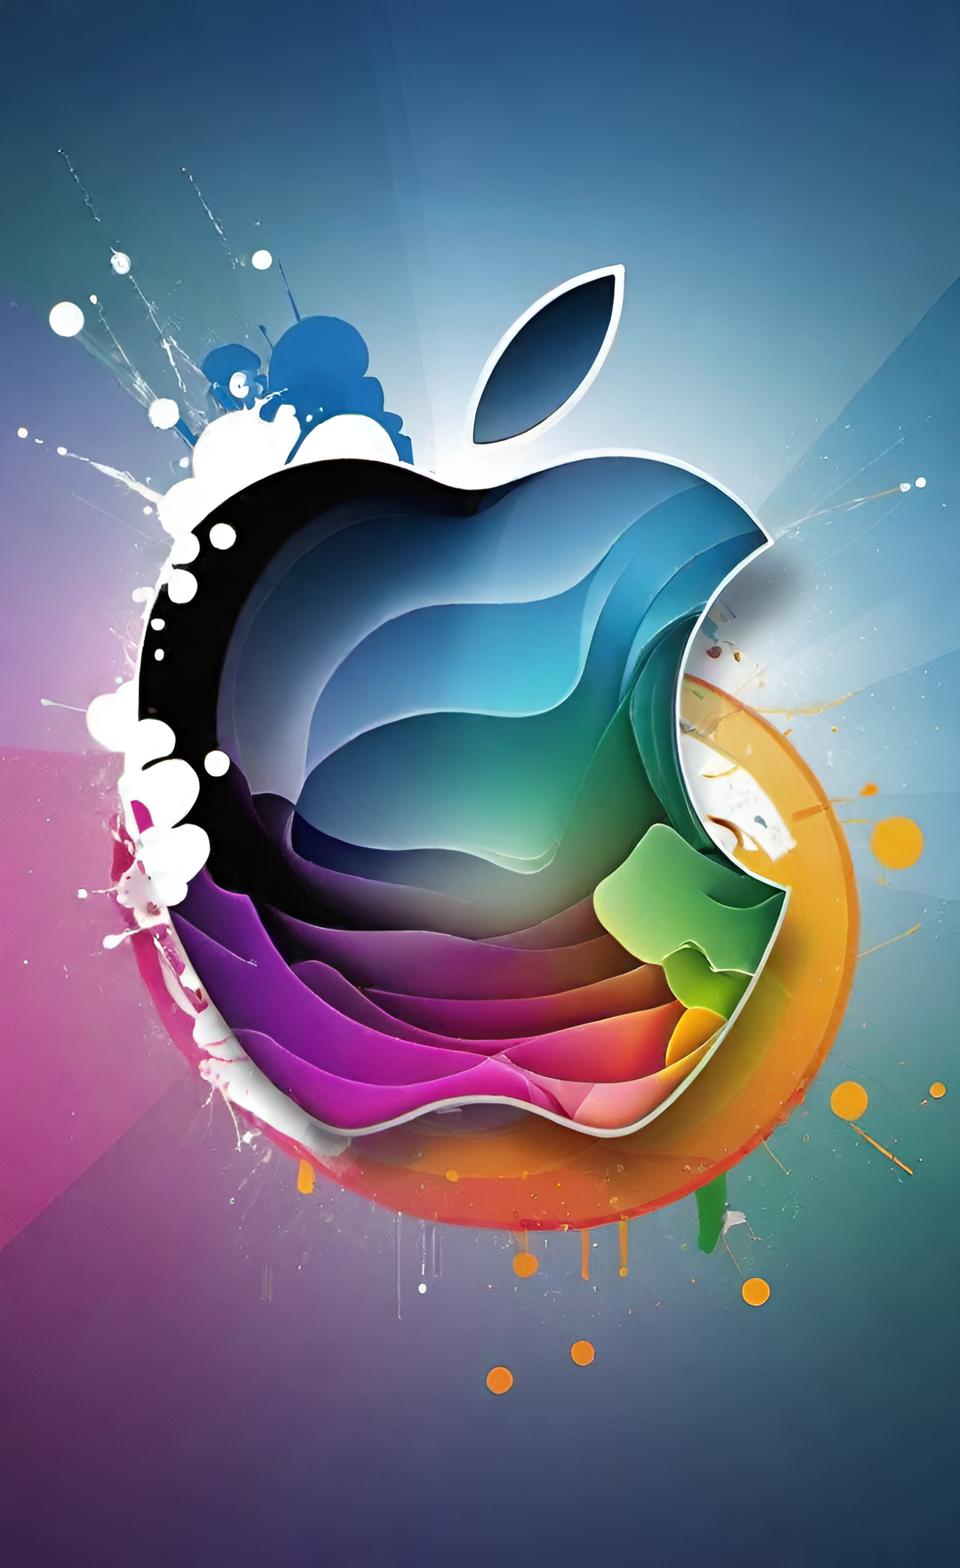 iPhone Wallpaper 4K | iPhone 8  iPhone 13 Pro Wallpaper  Free Download